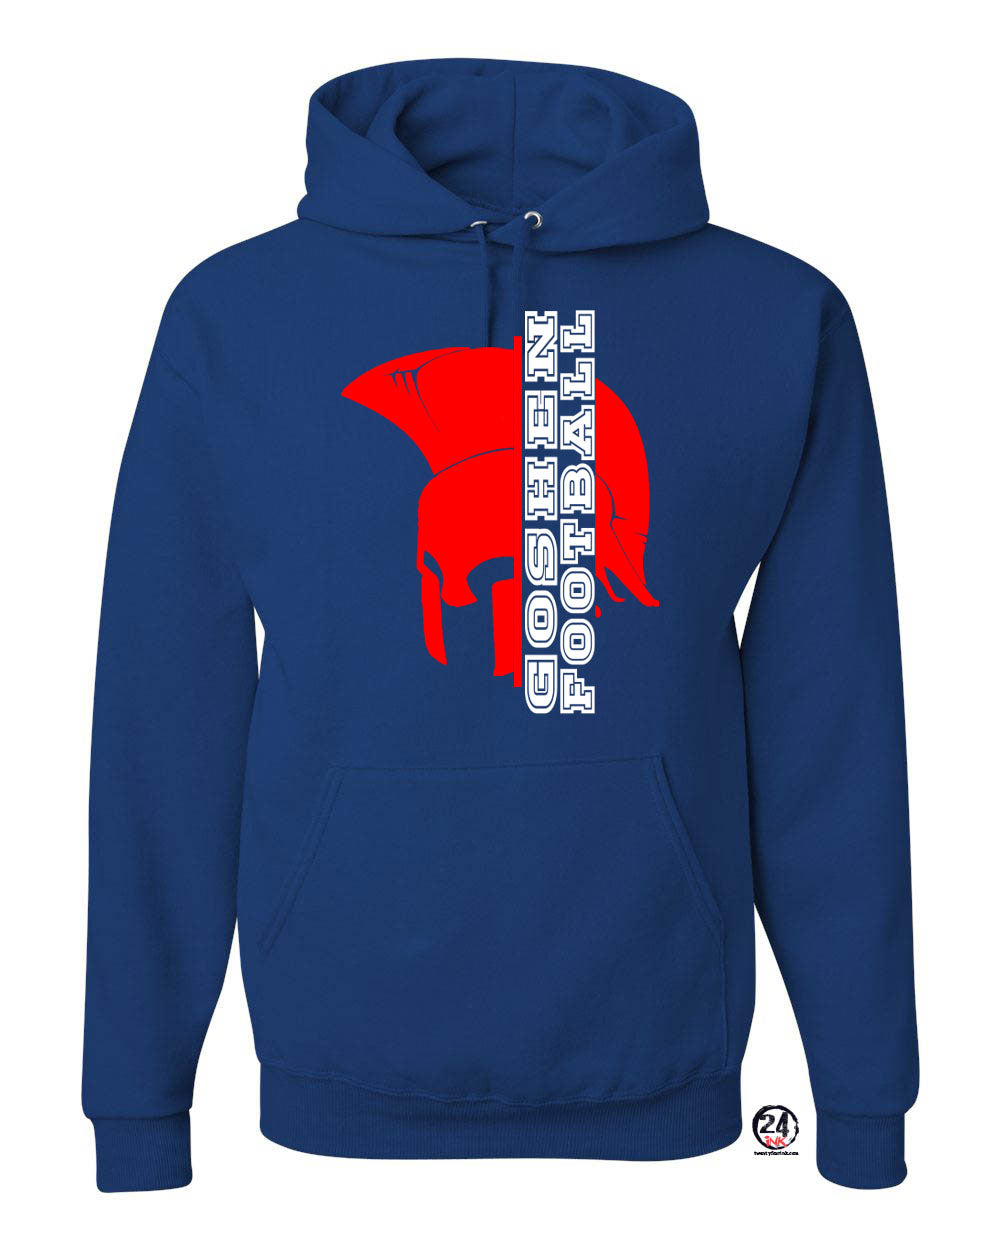 Goshen Football Design 7 Hooded Sweatshirt